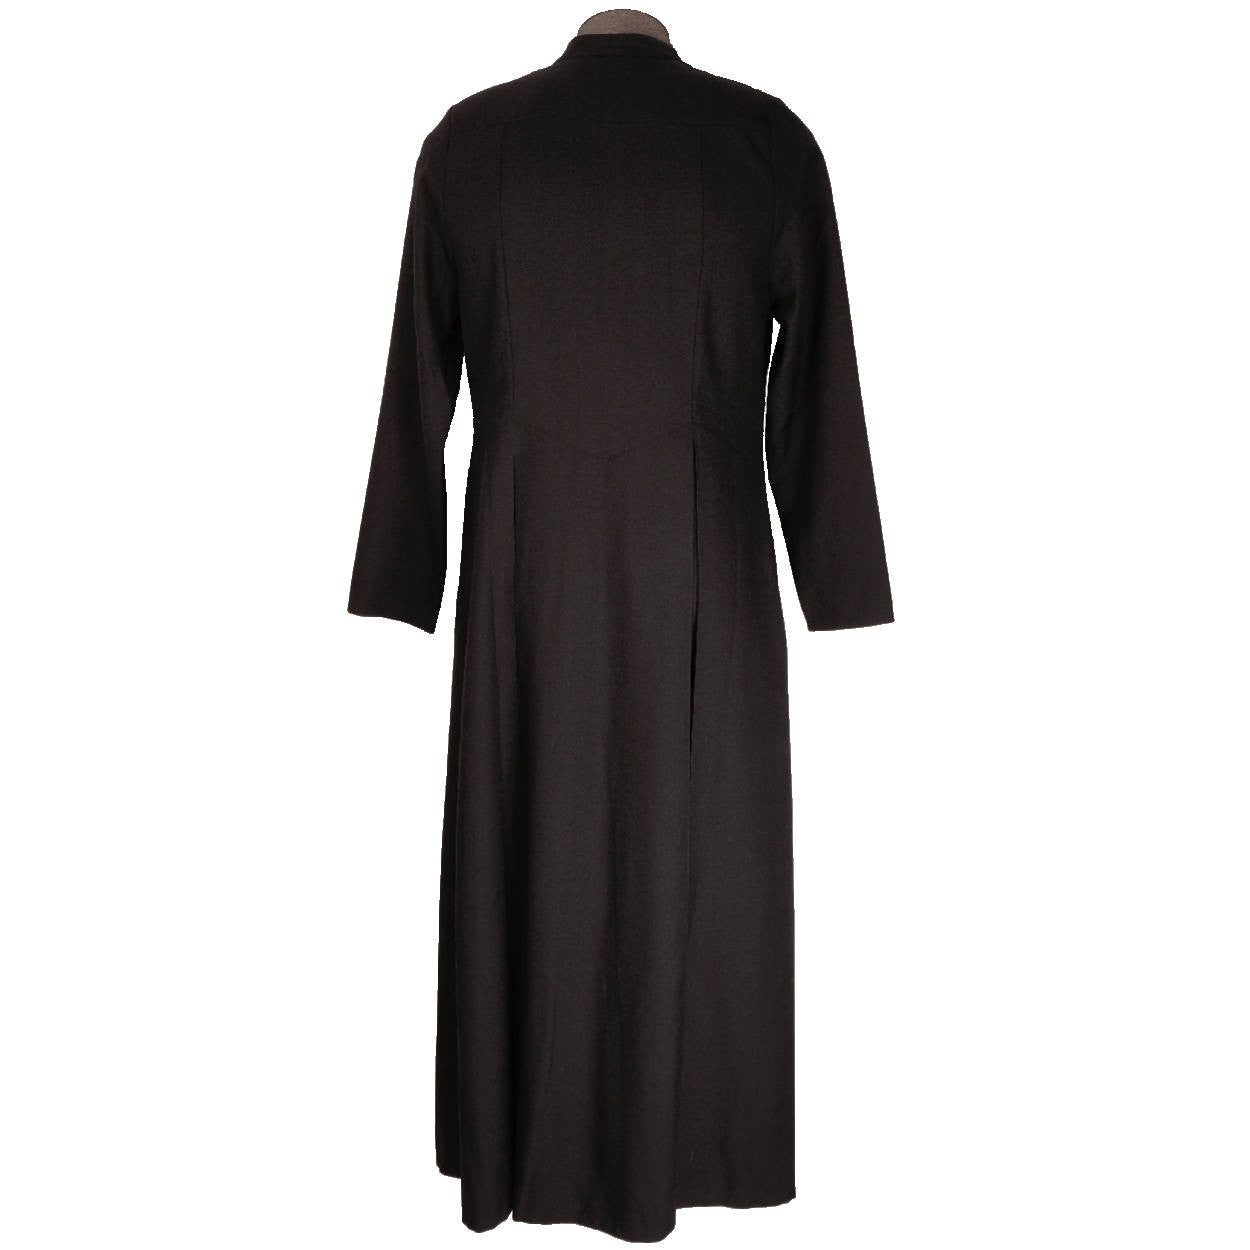 Vintage Roman Catholic Priest Cassock Soutane Black Robe Size M